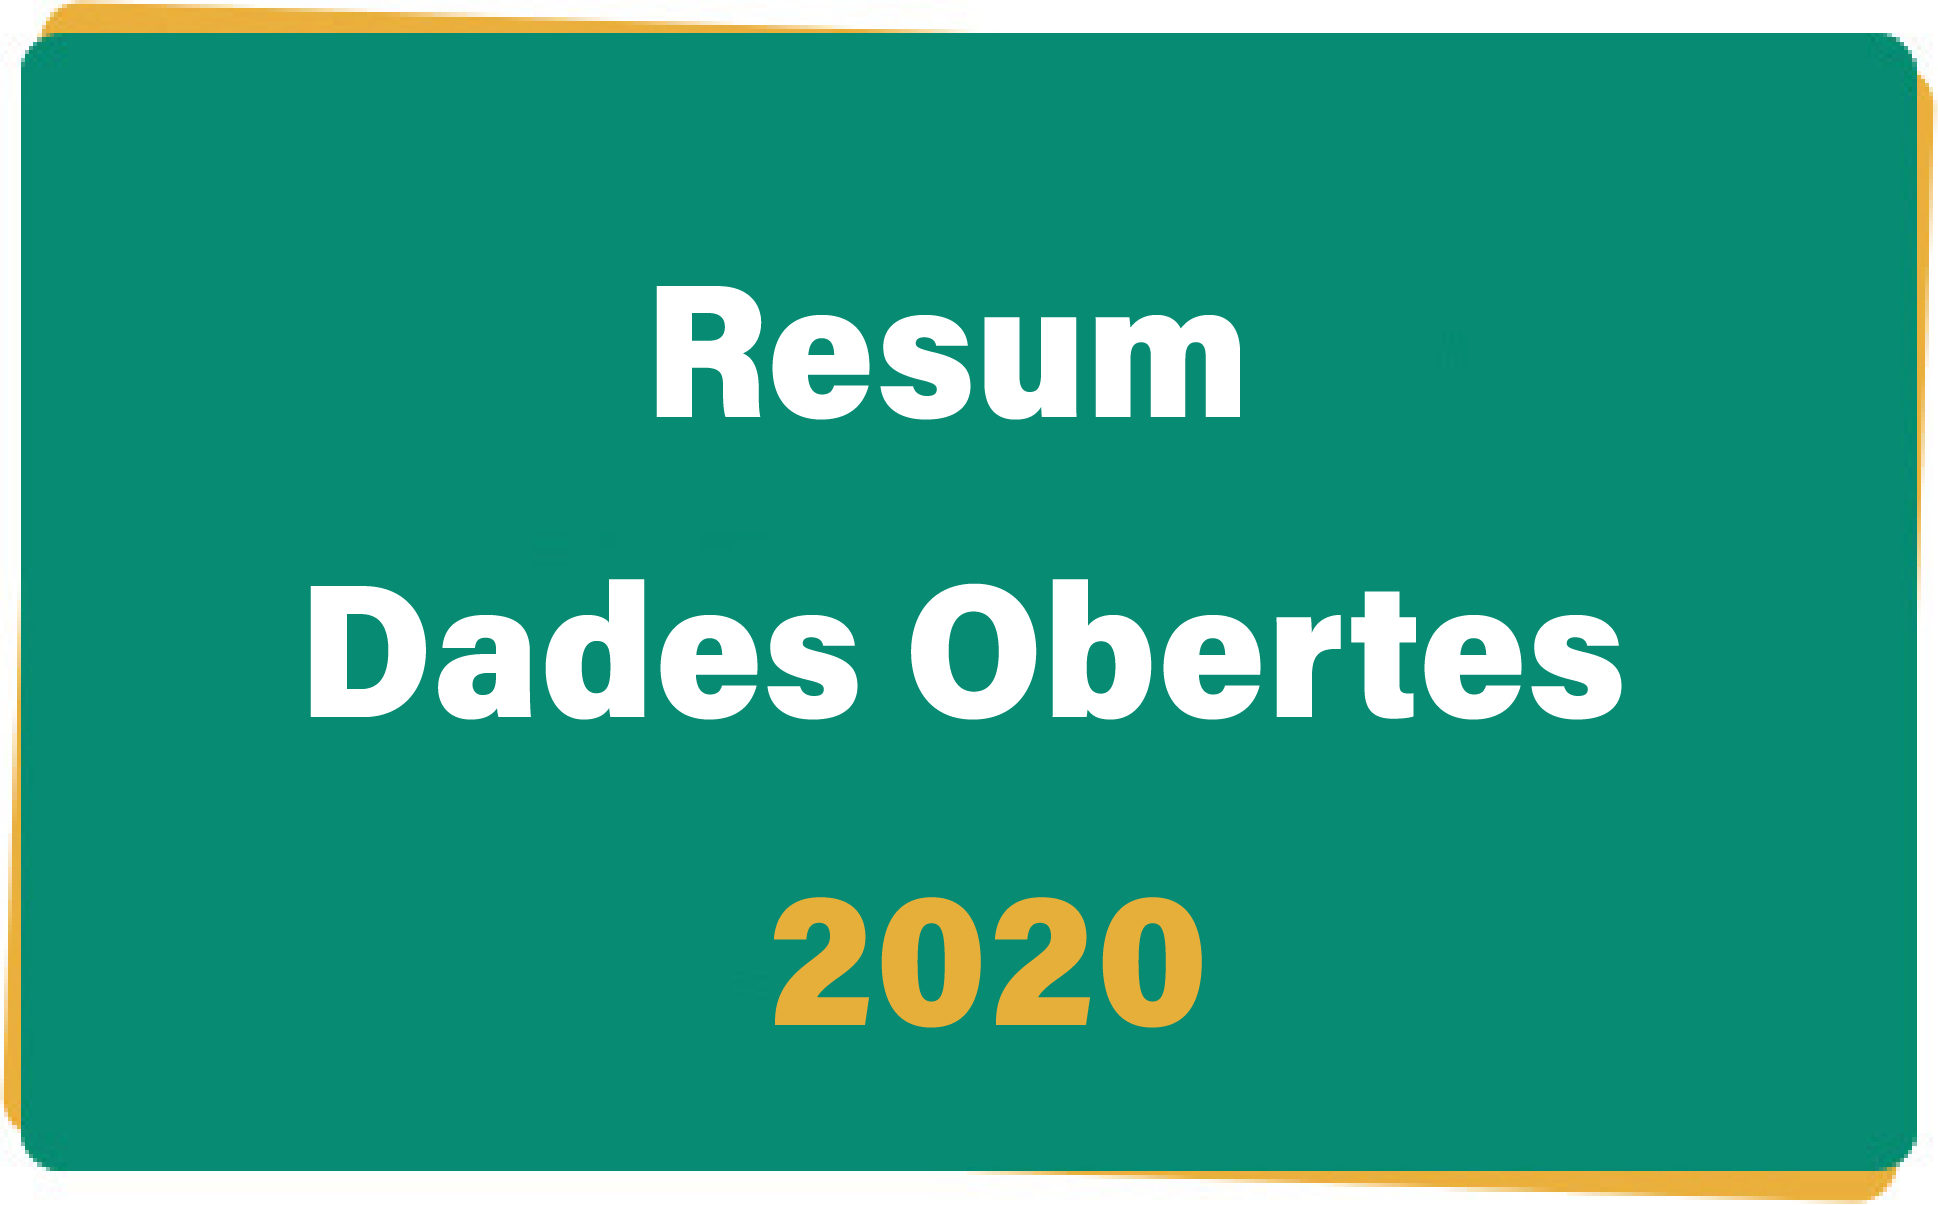 Resum Dades Obertes 2020